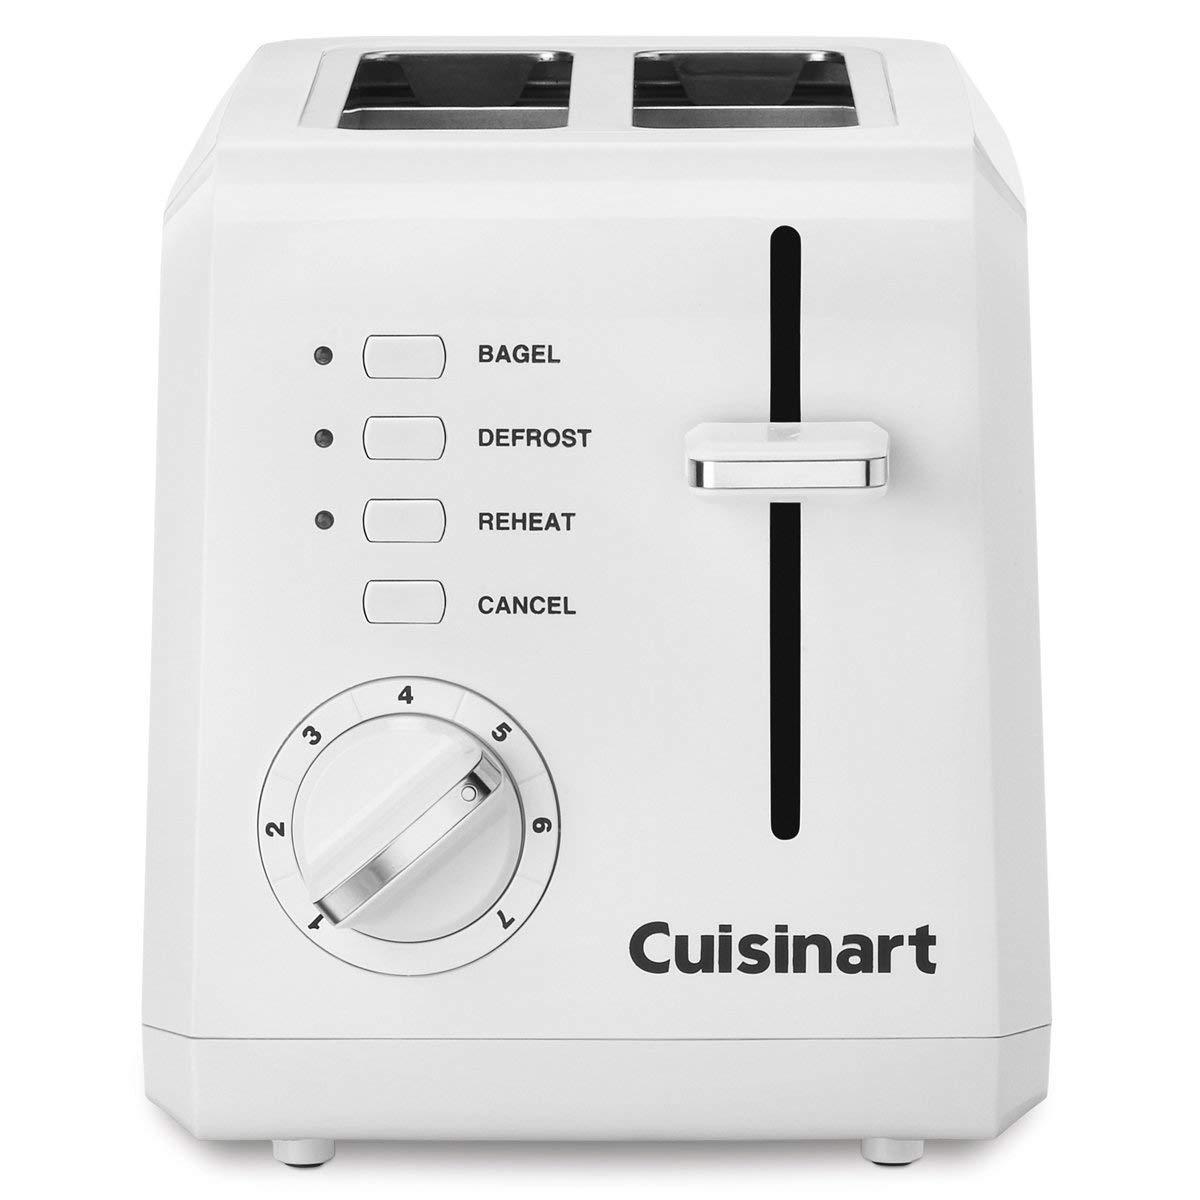 Cuisinart Countertop Toaster, 2-Slice